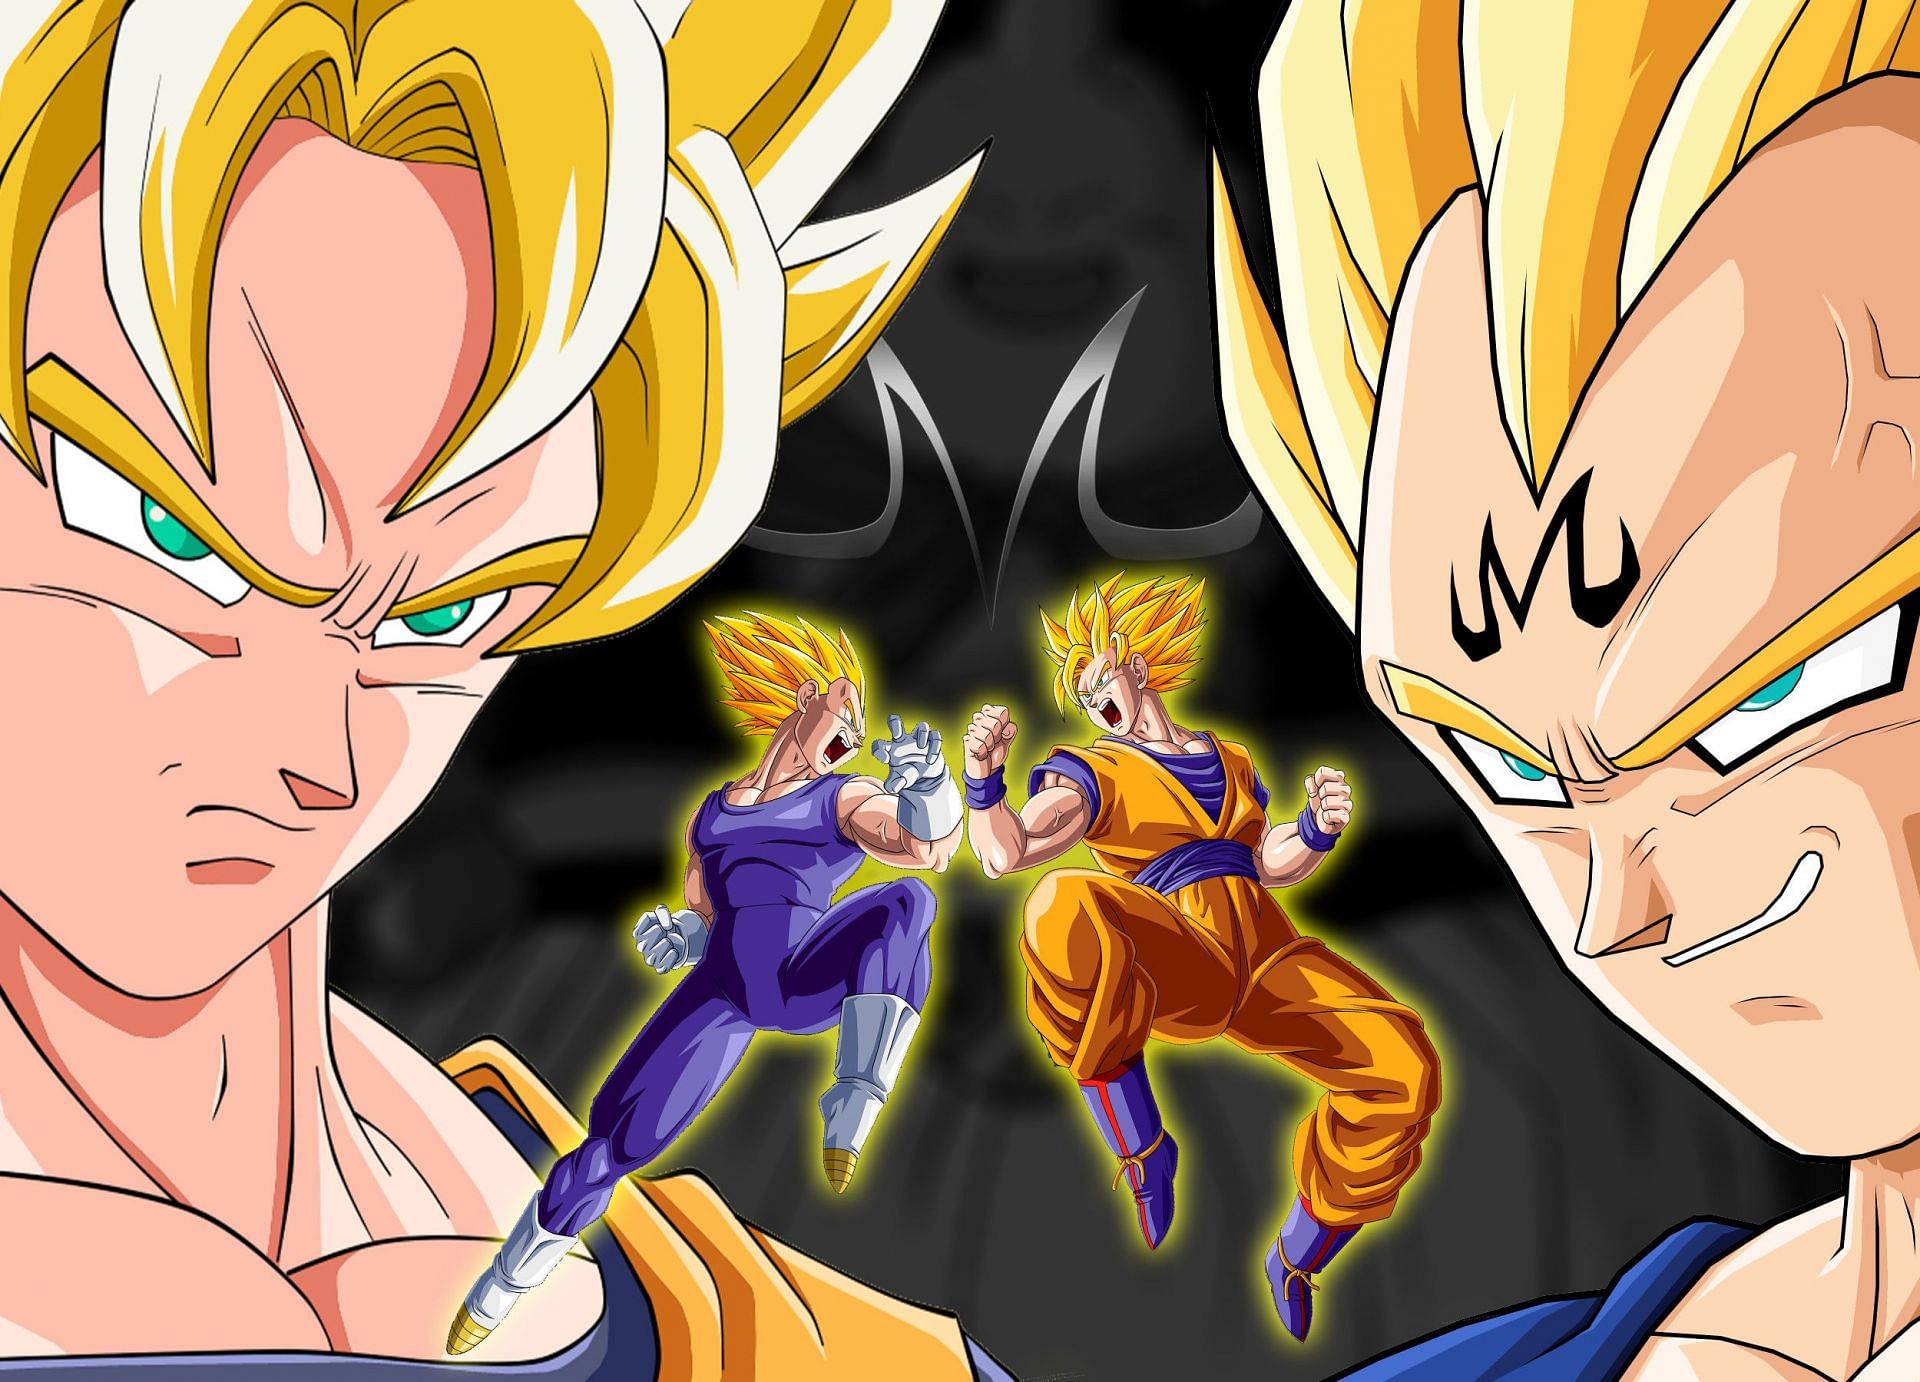 Goku and Vegeta (Image via Toei animation)